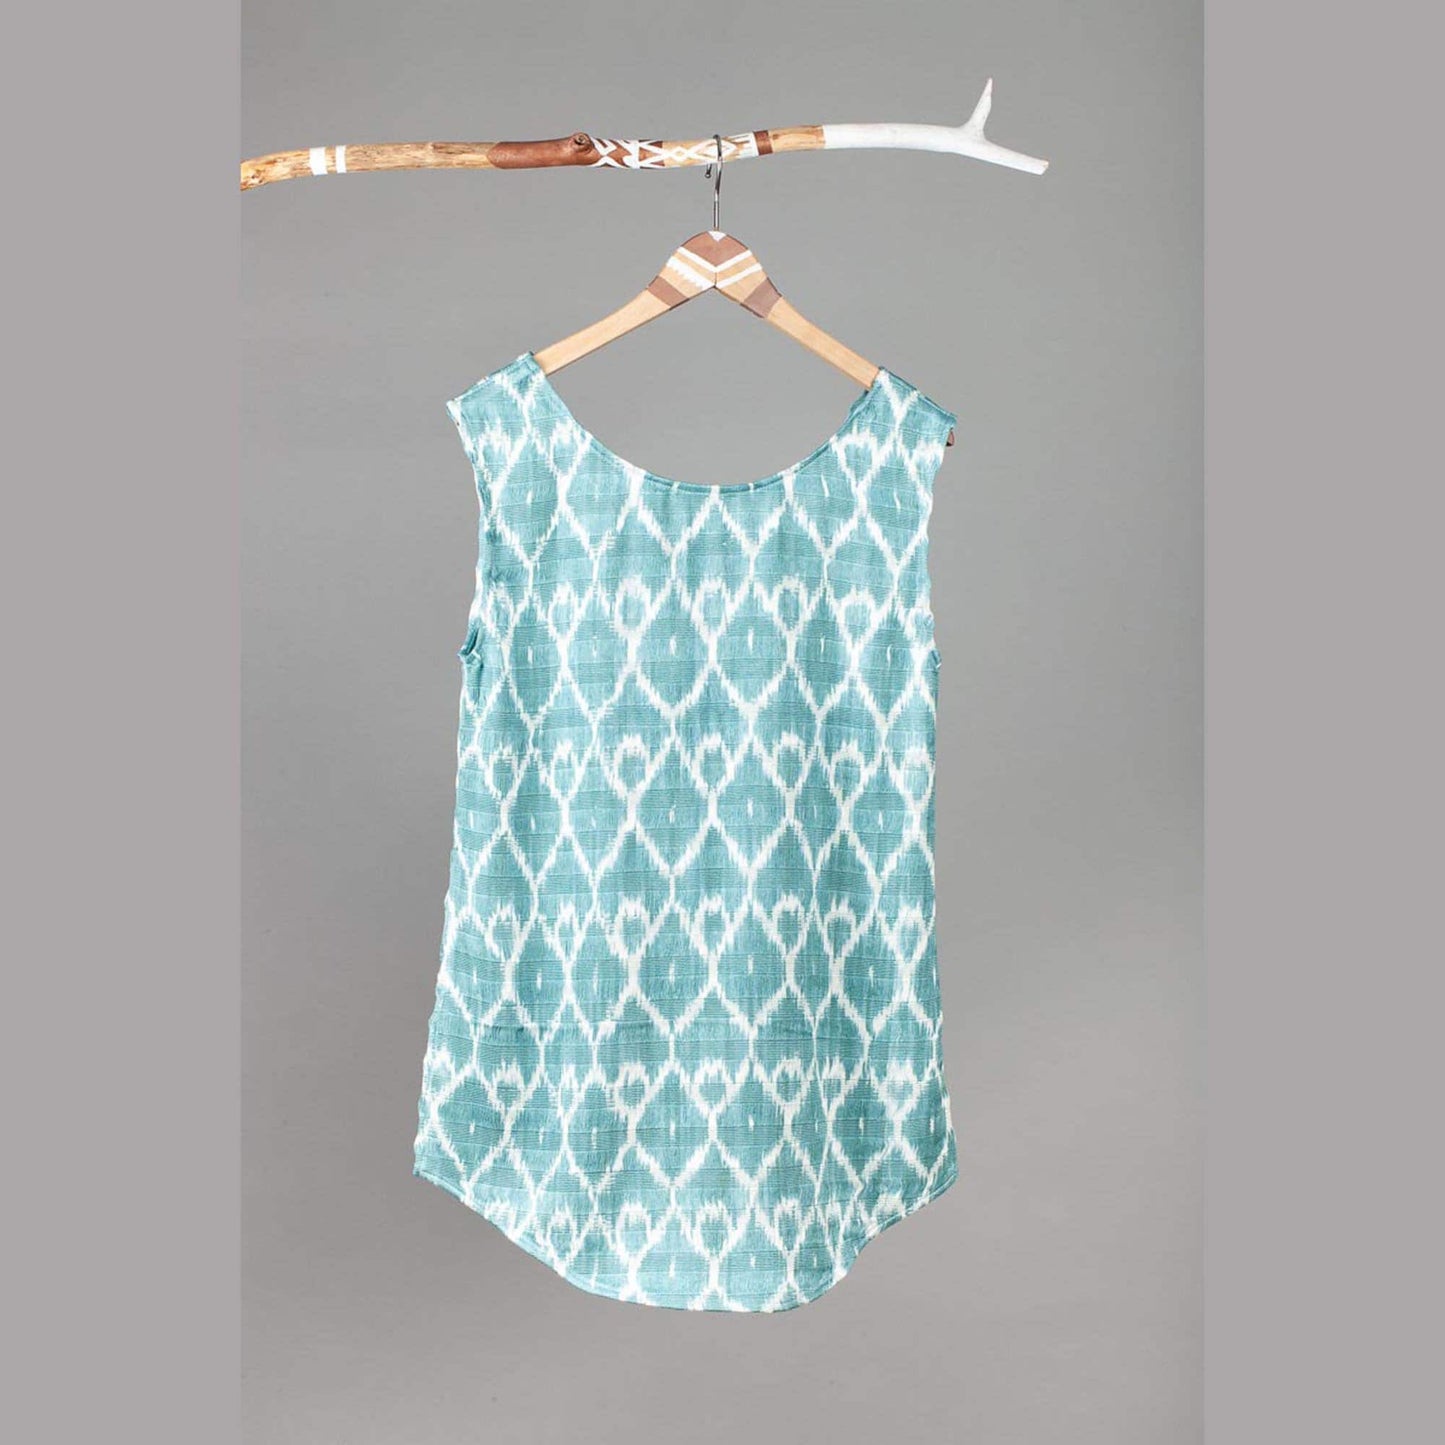 Light *Jaspe* shirt in turquoise, UNIKAT, spring, handwoven, in Guatemala, made in Germany, summer dress, ANU - Jaspe Dress